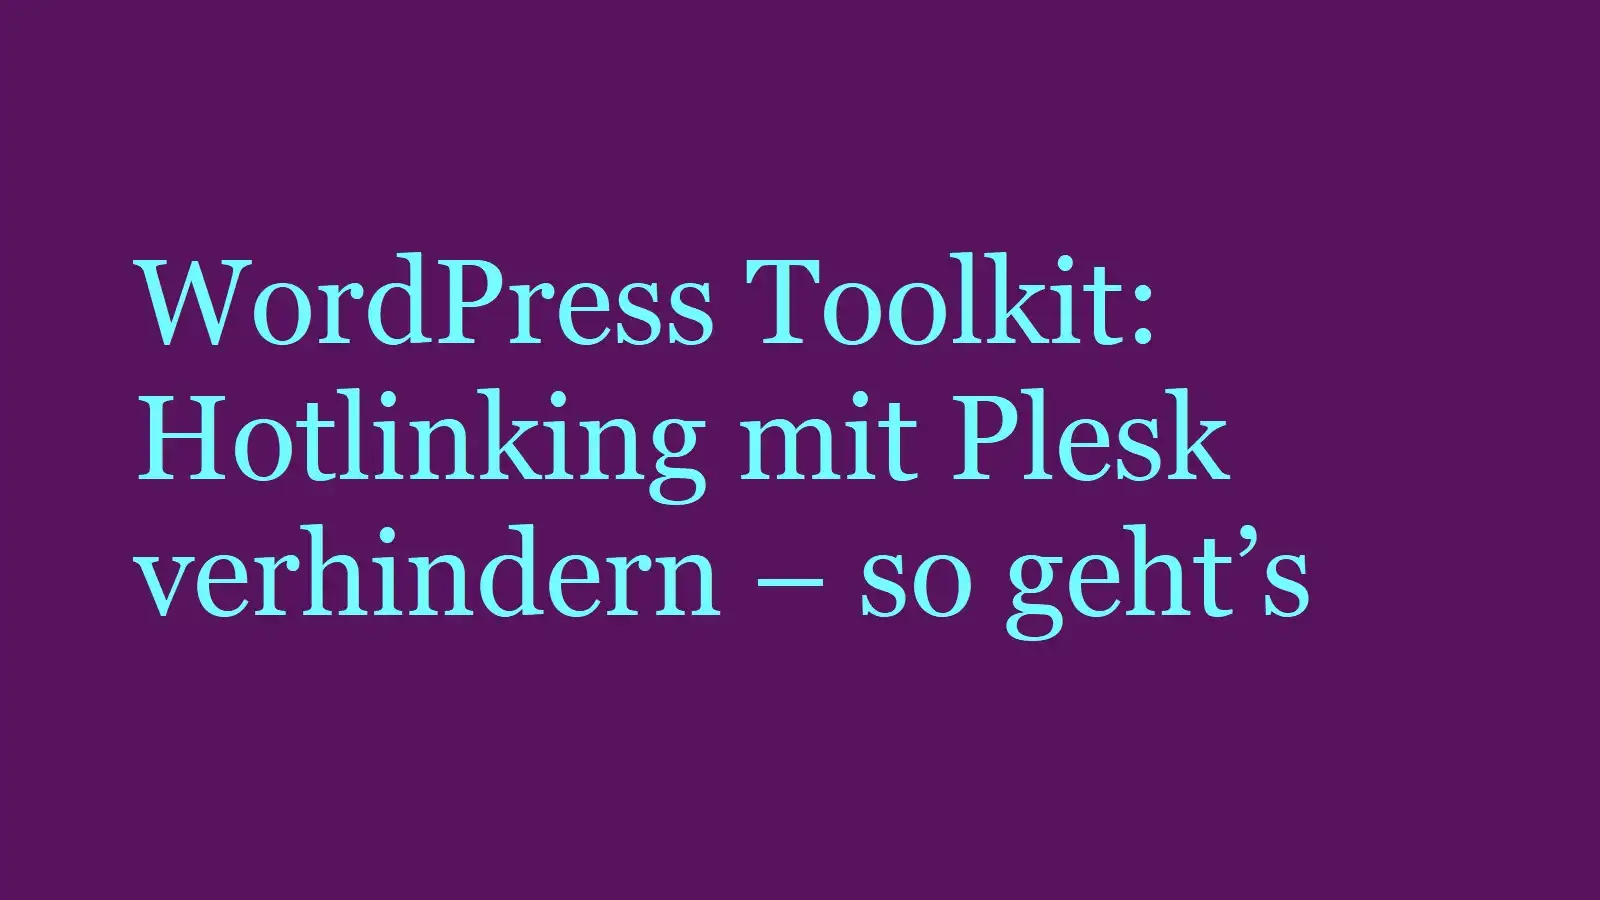 WordPress Toolkit: Hotlinking  mit Plesk verhindern – so geht’s